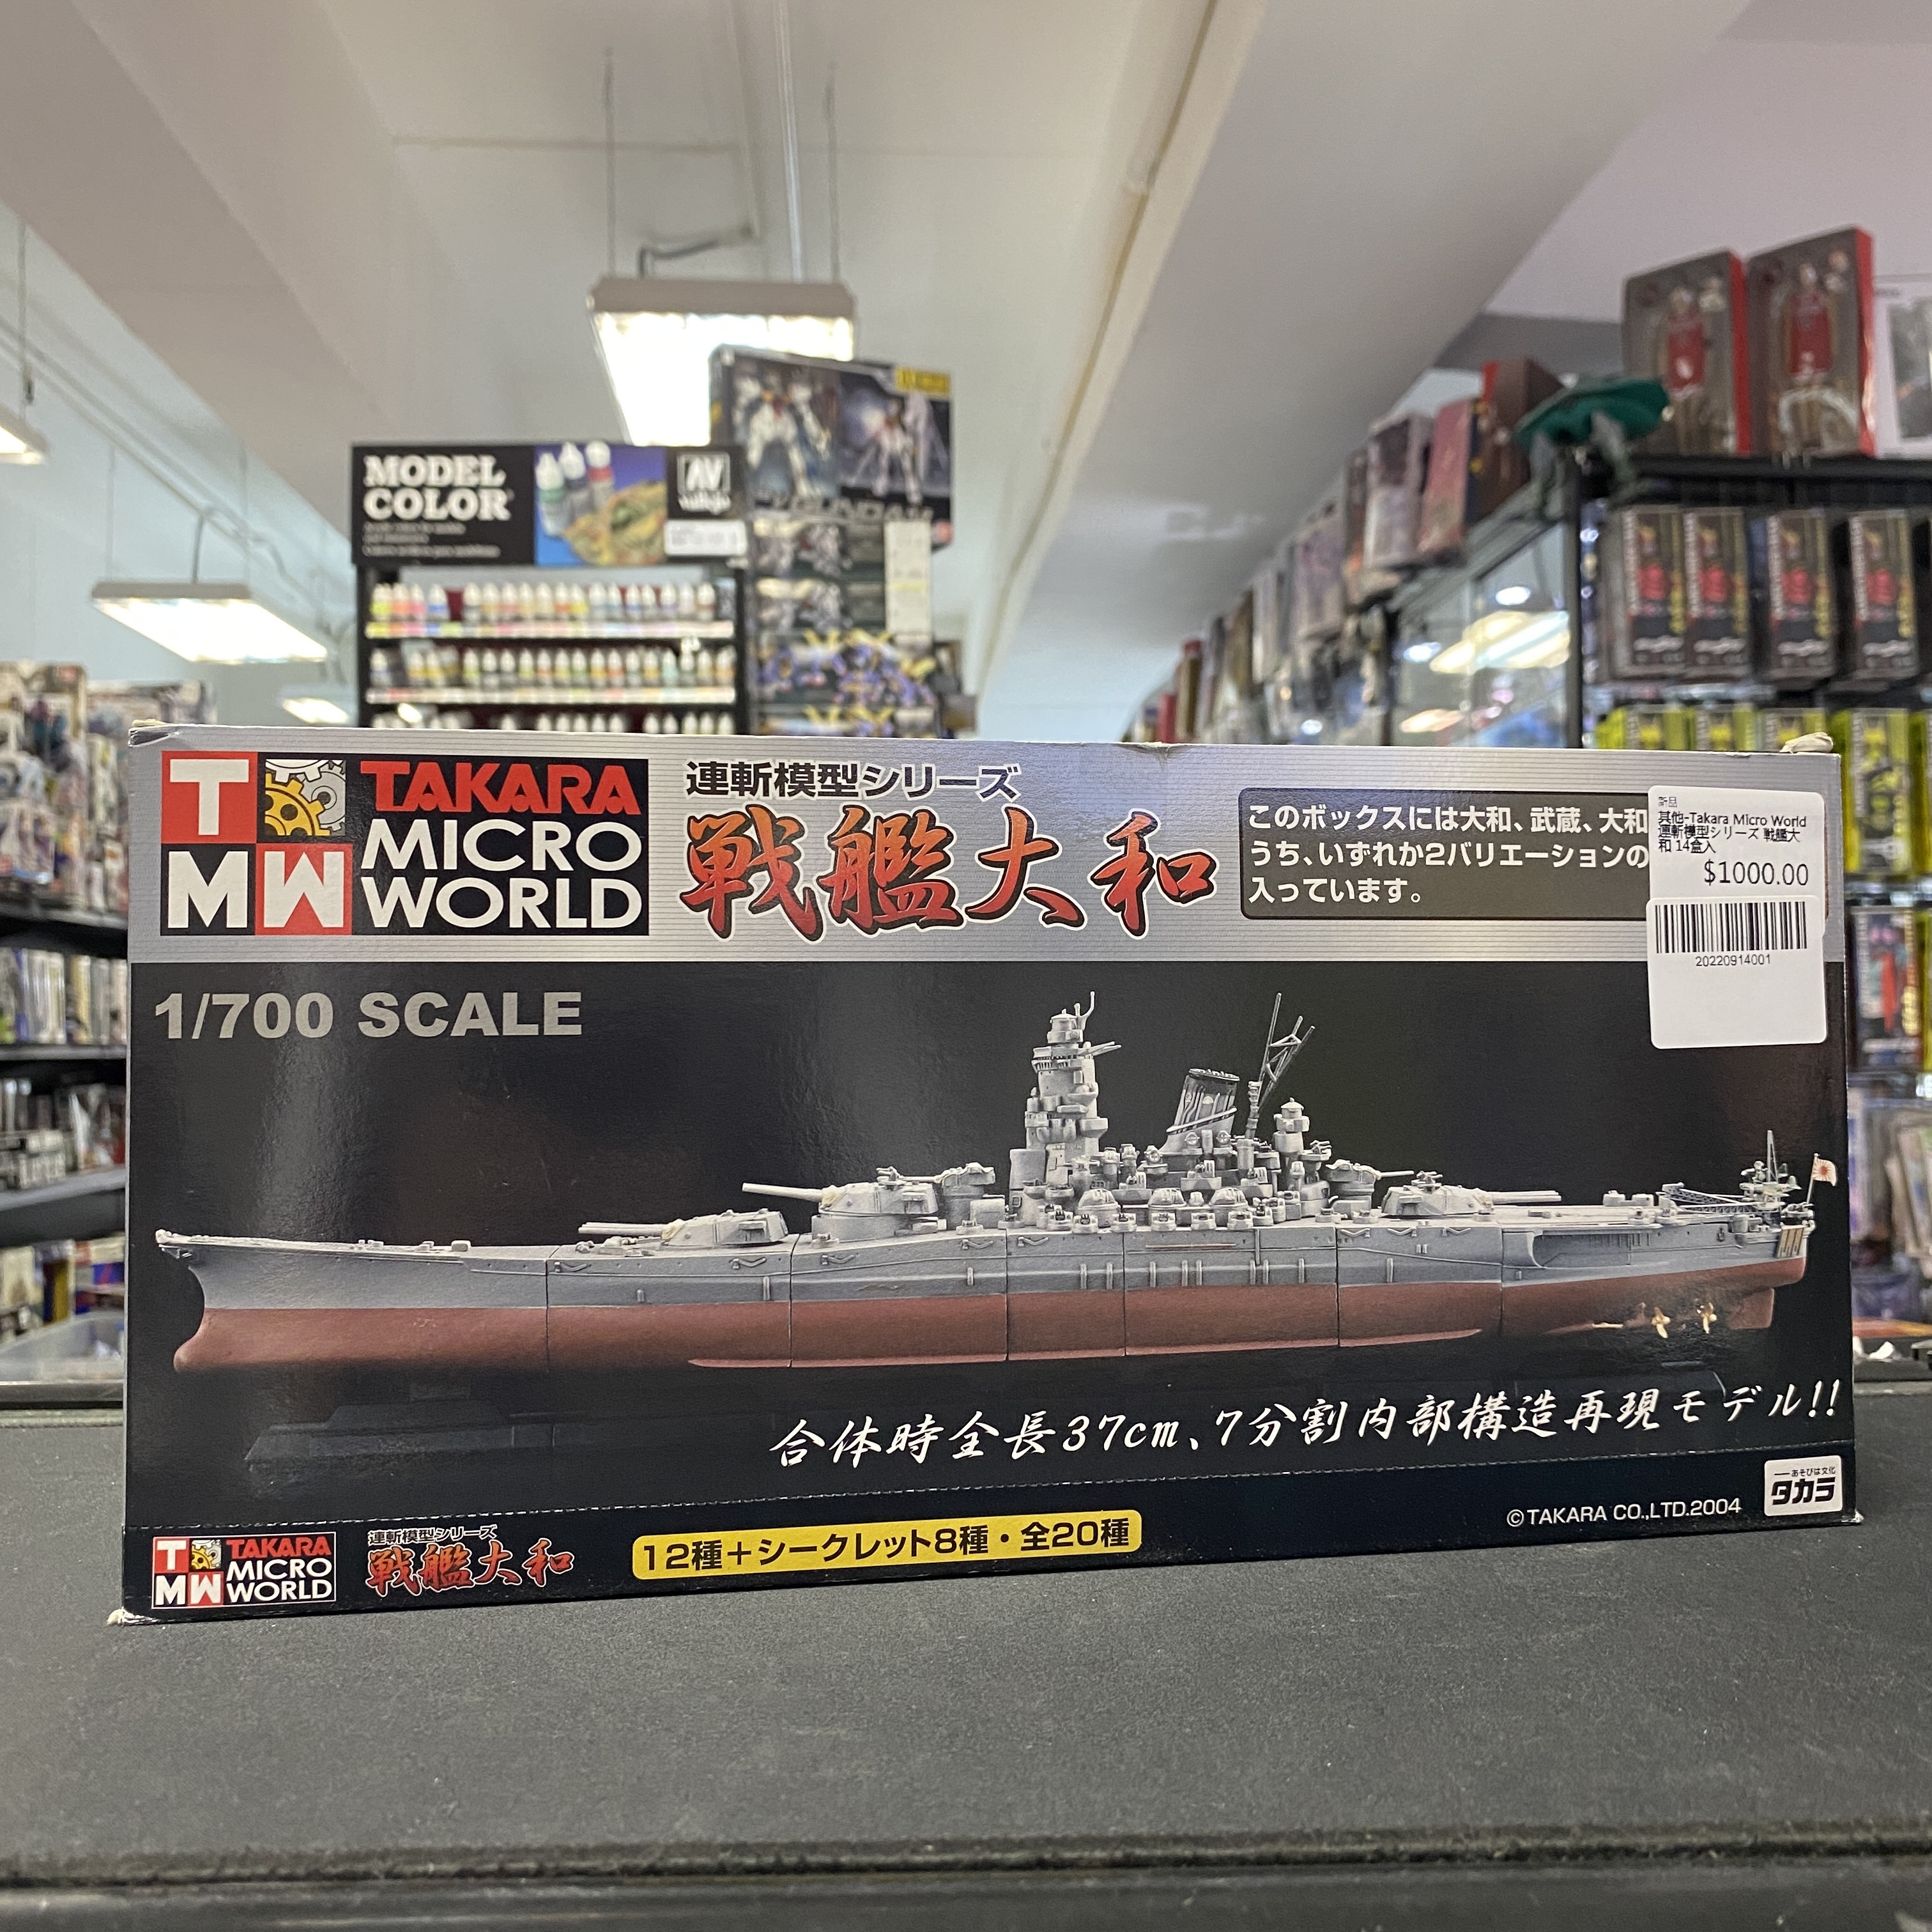 其他-Takara Micro World 連斬模型シリーズ戦艦大和14盒入